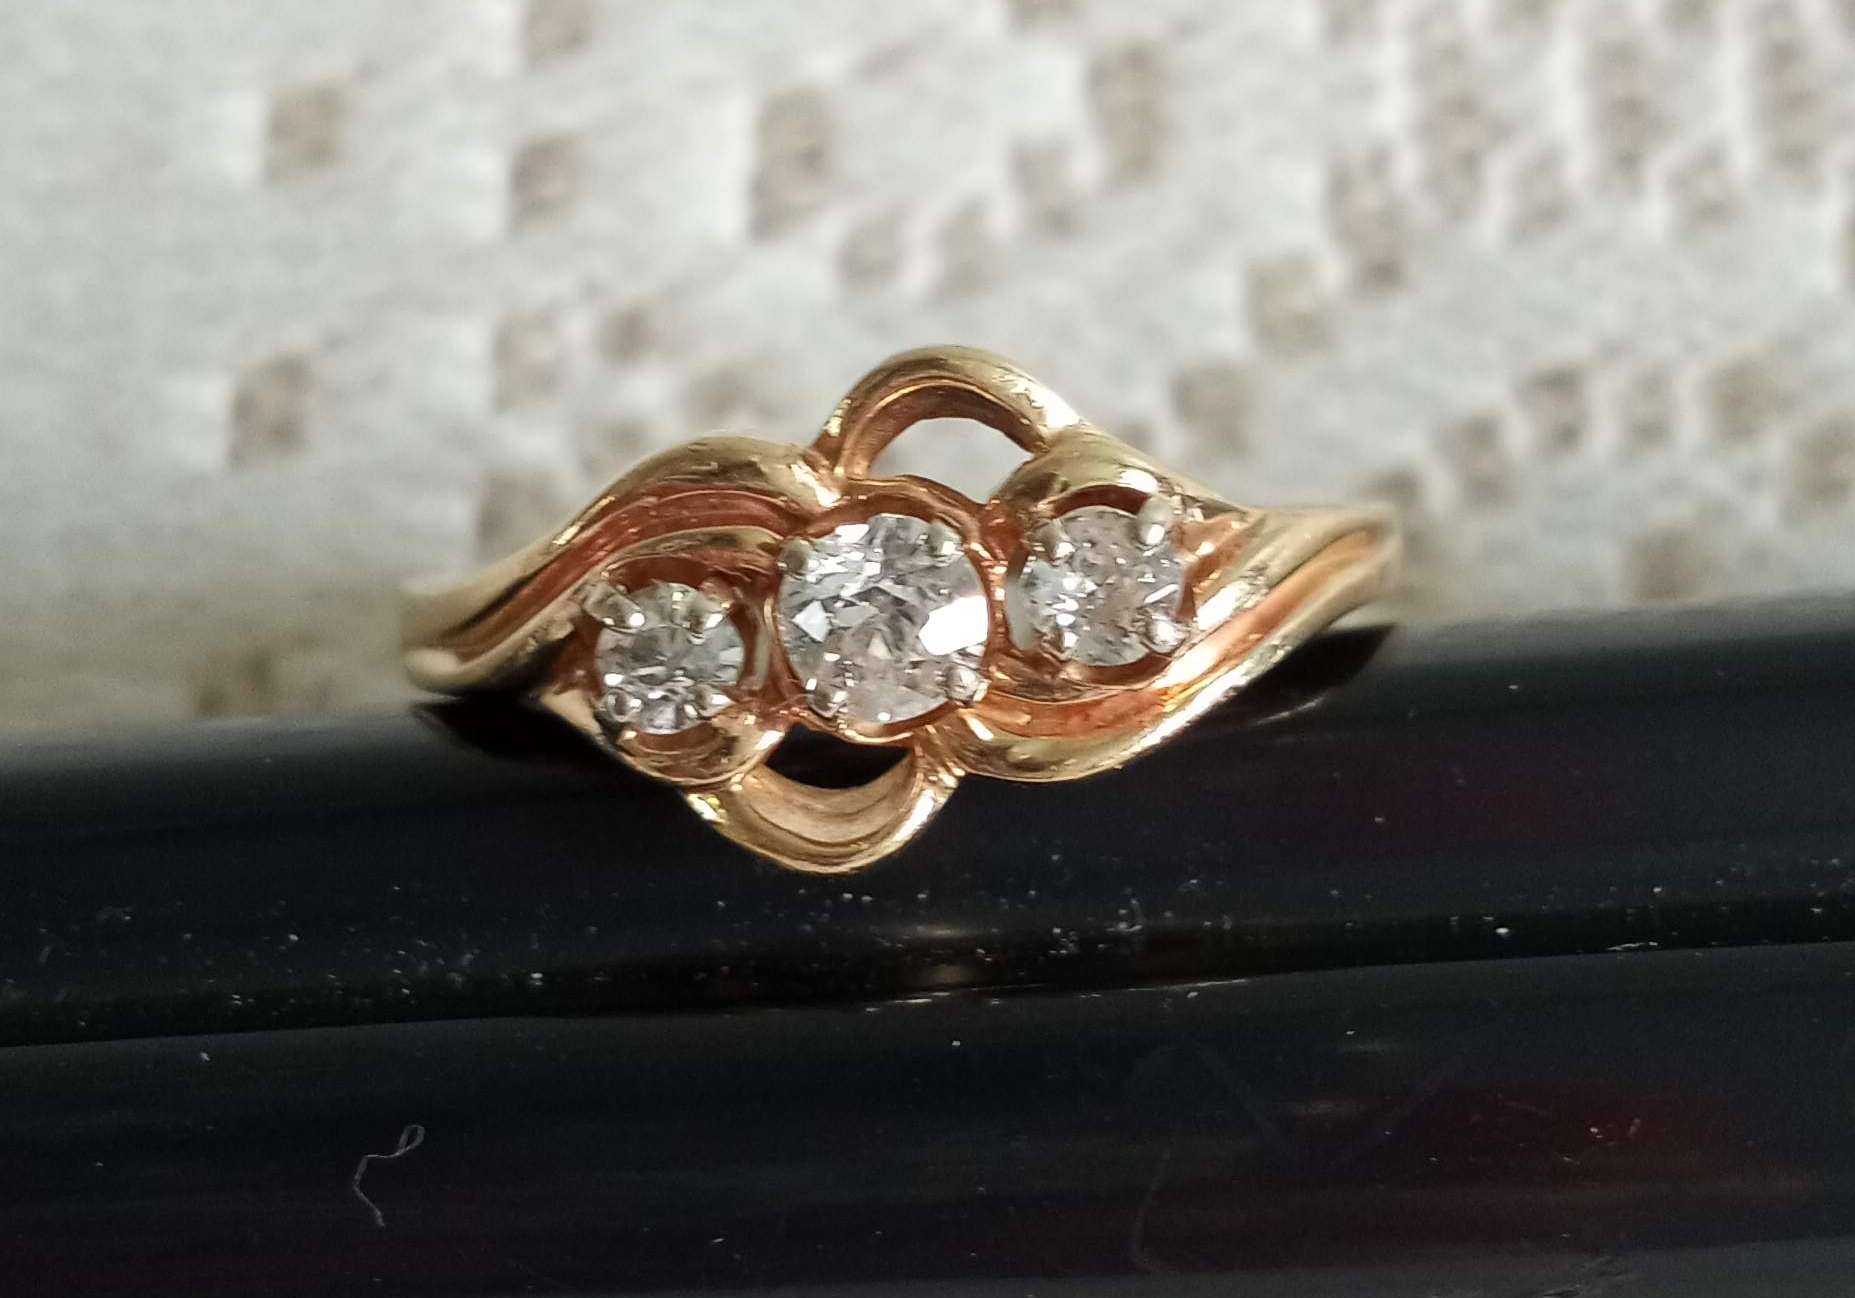 Rare Tiffany & Co. Proposal Diamond Ring Snow Globe Collectors Piece